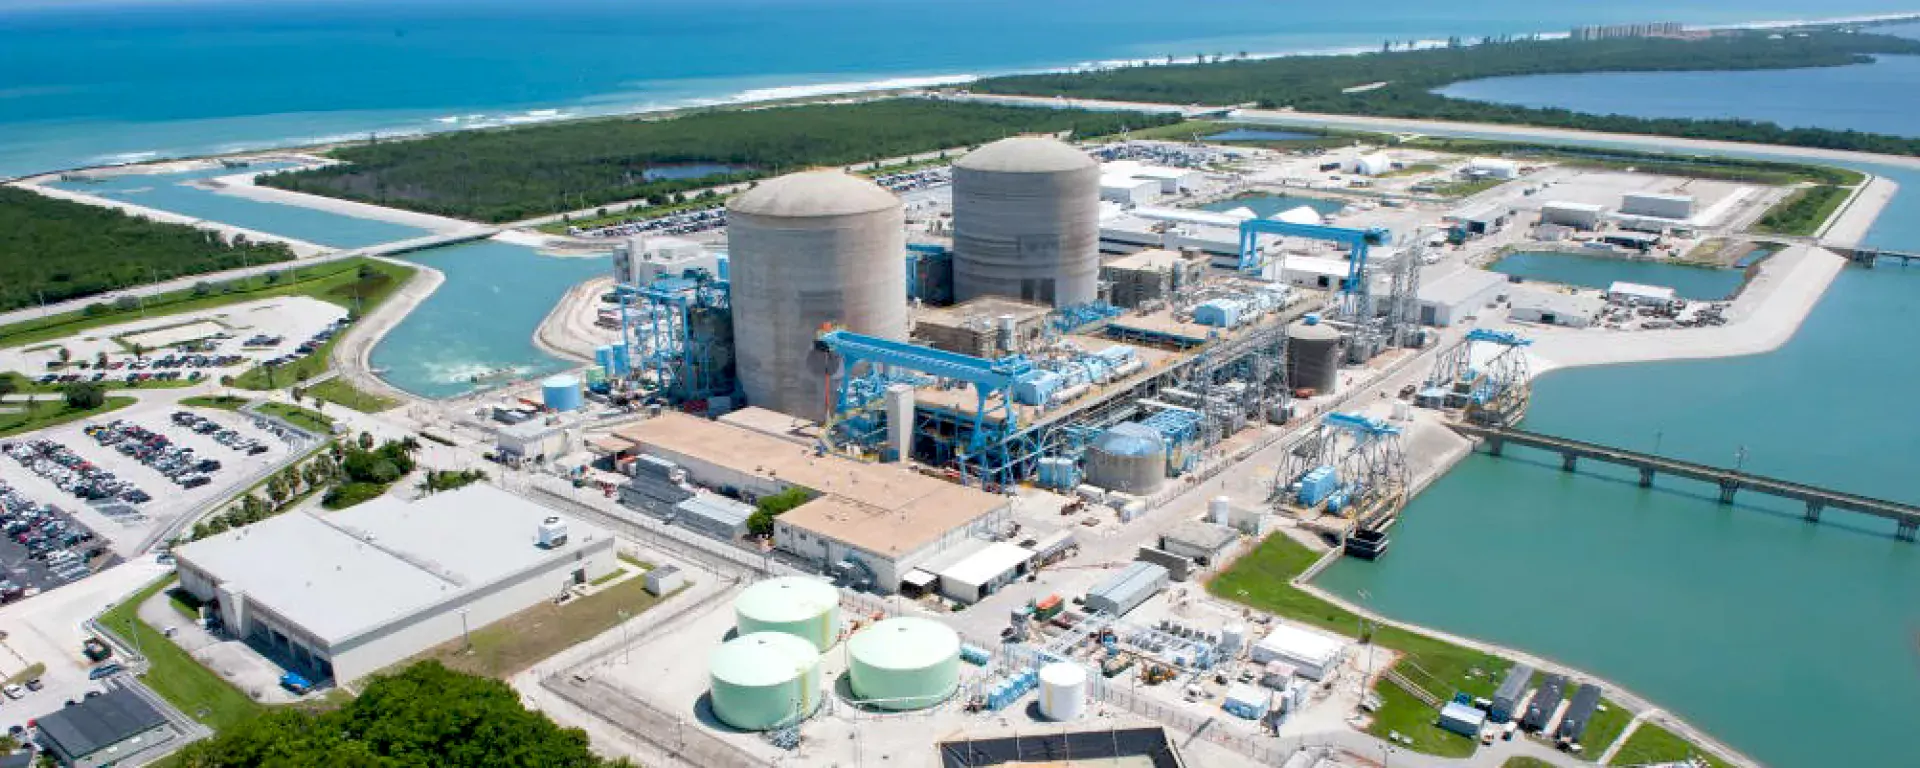 St. Lucie nuclear Power Plant